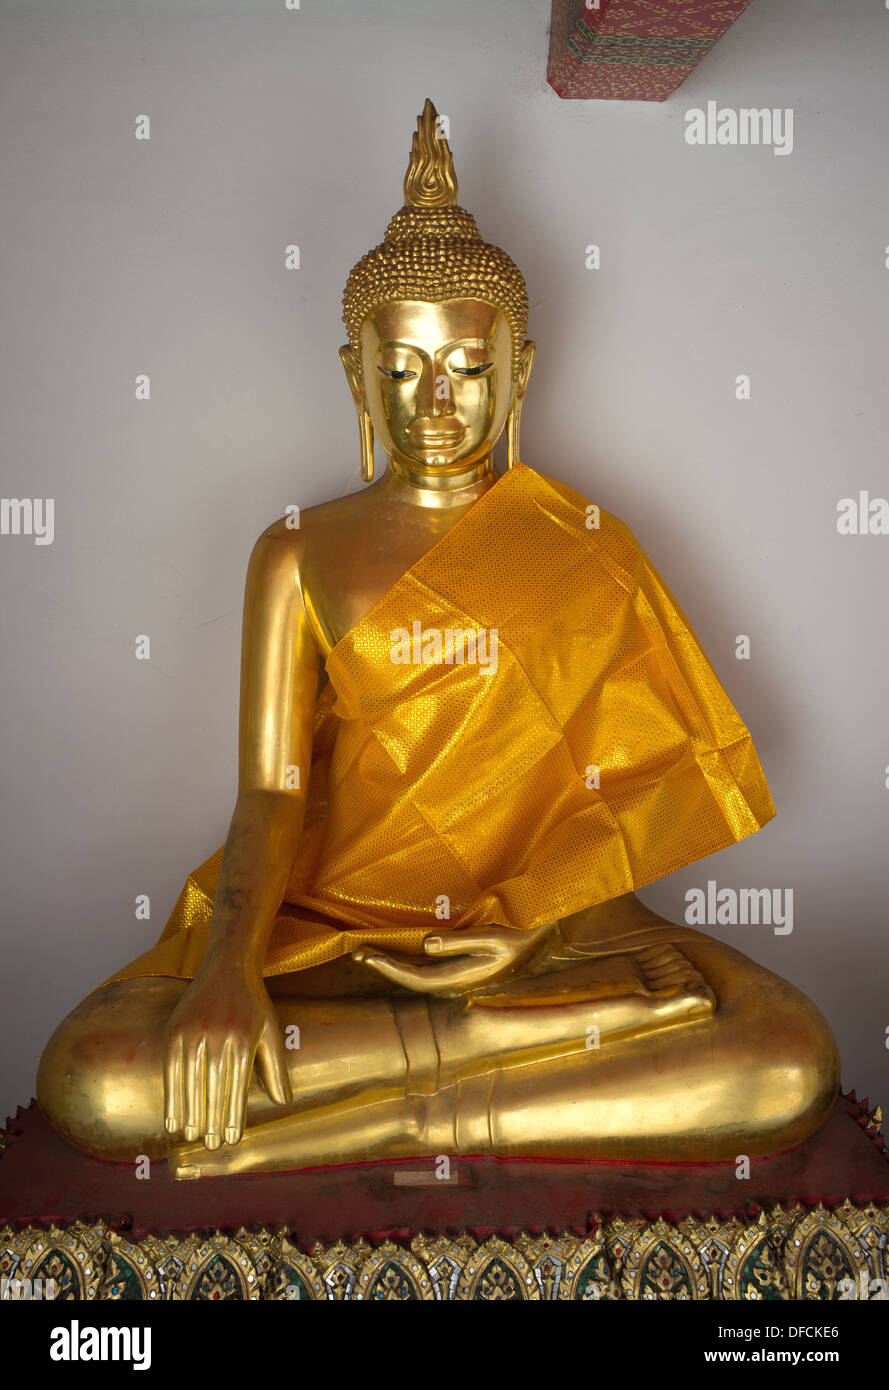 Gold statue of the Buddha reaching enlightenment, Bangkok Thailand Stock Photo